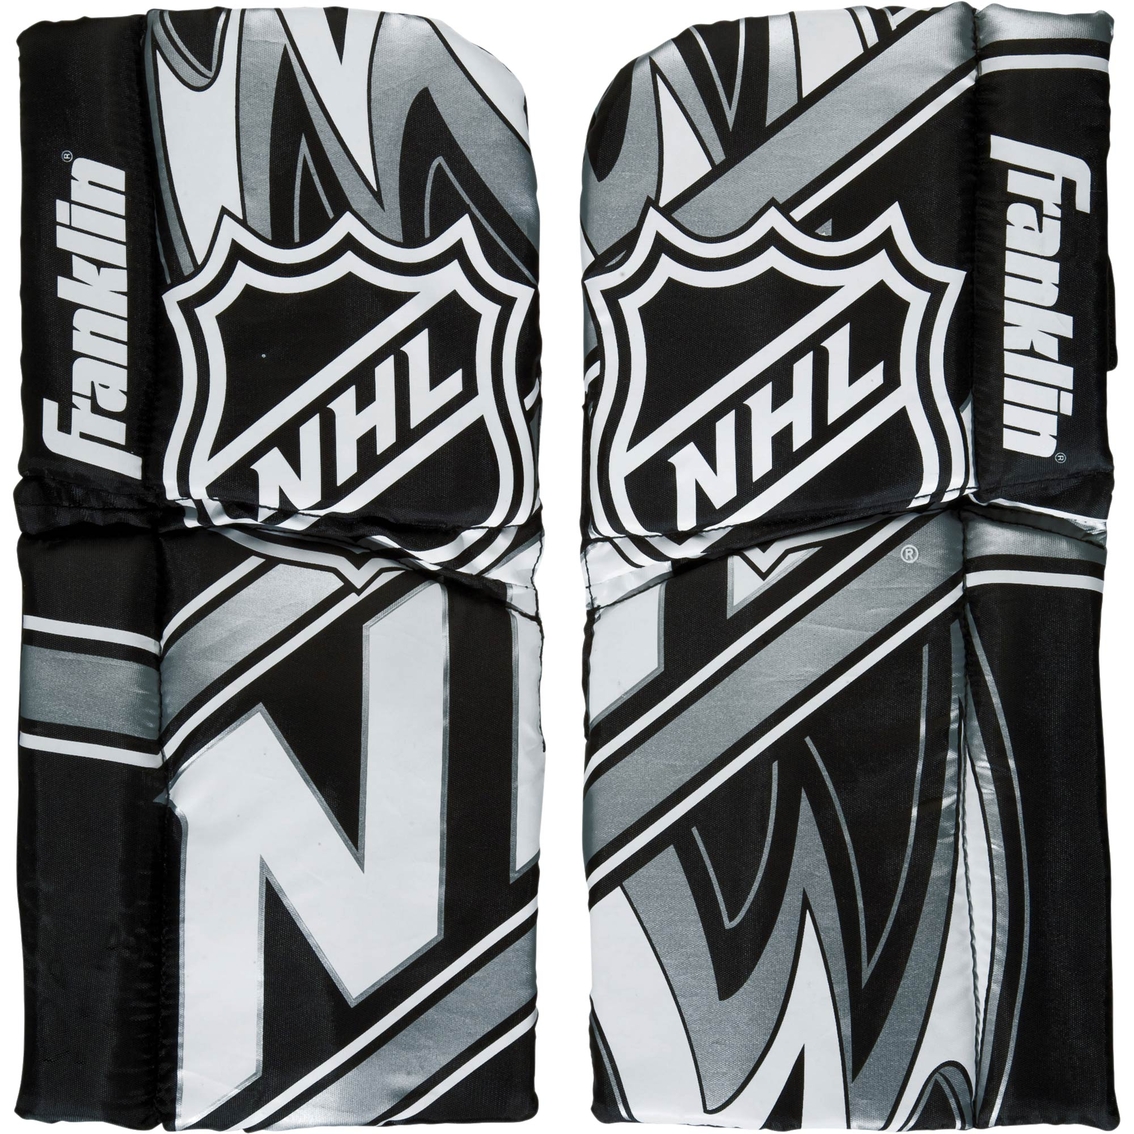 NHL Mini Hockey Goalie Equipment/ Mask Set, Franklin Sports